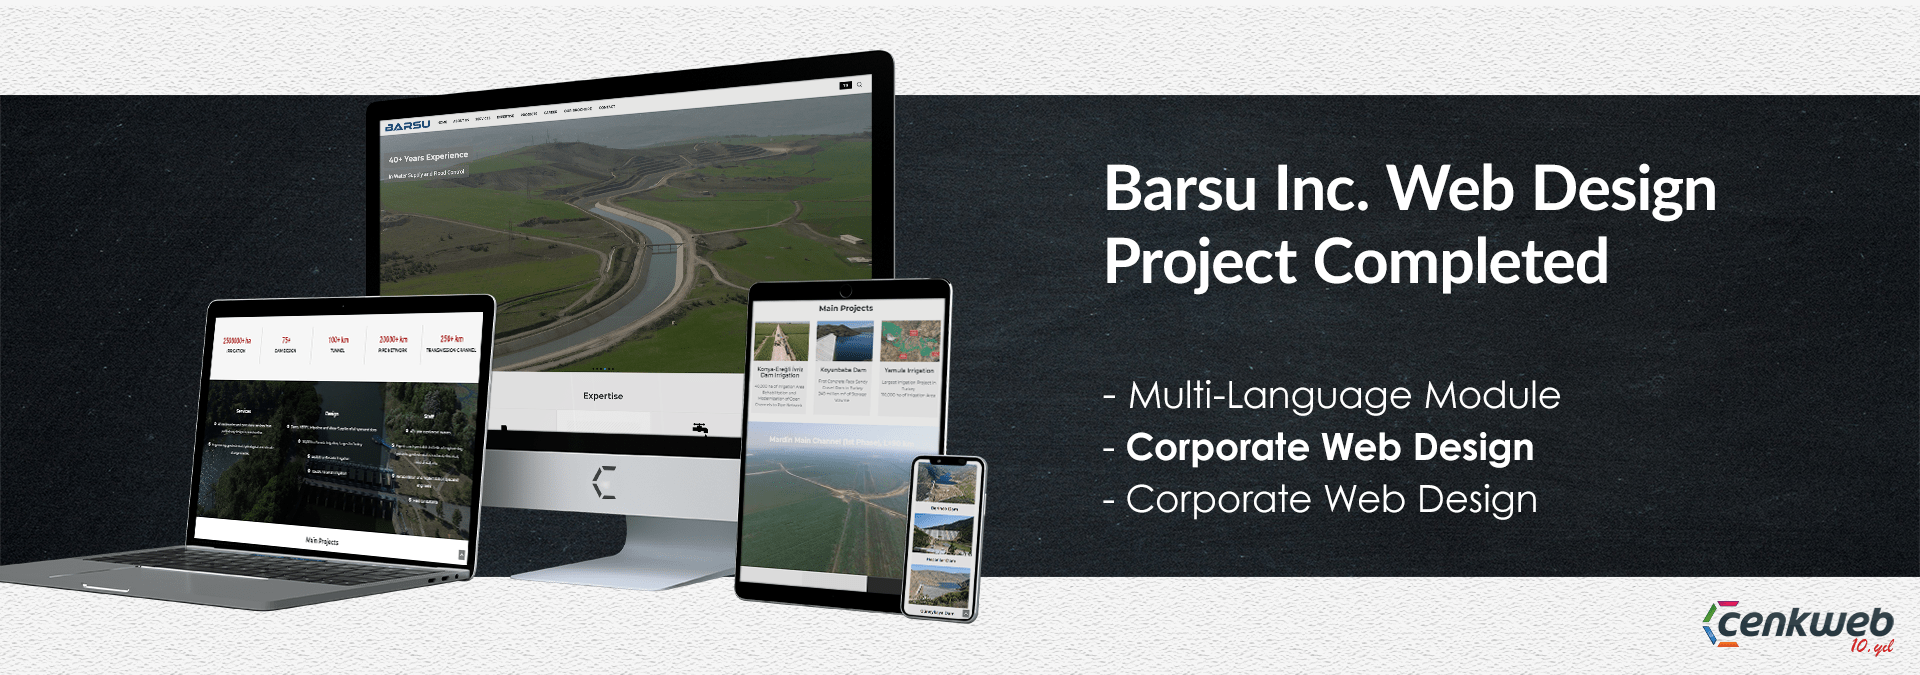 Web Design - Barsu